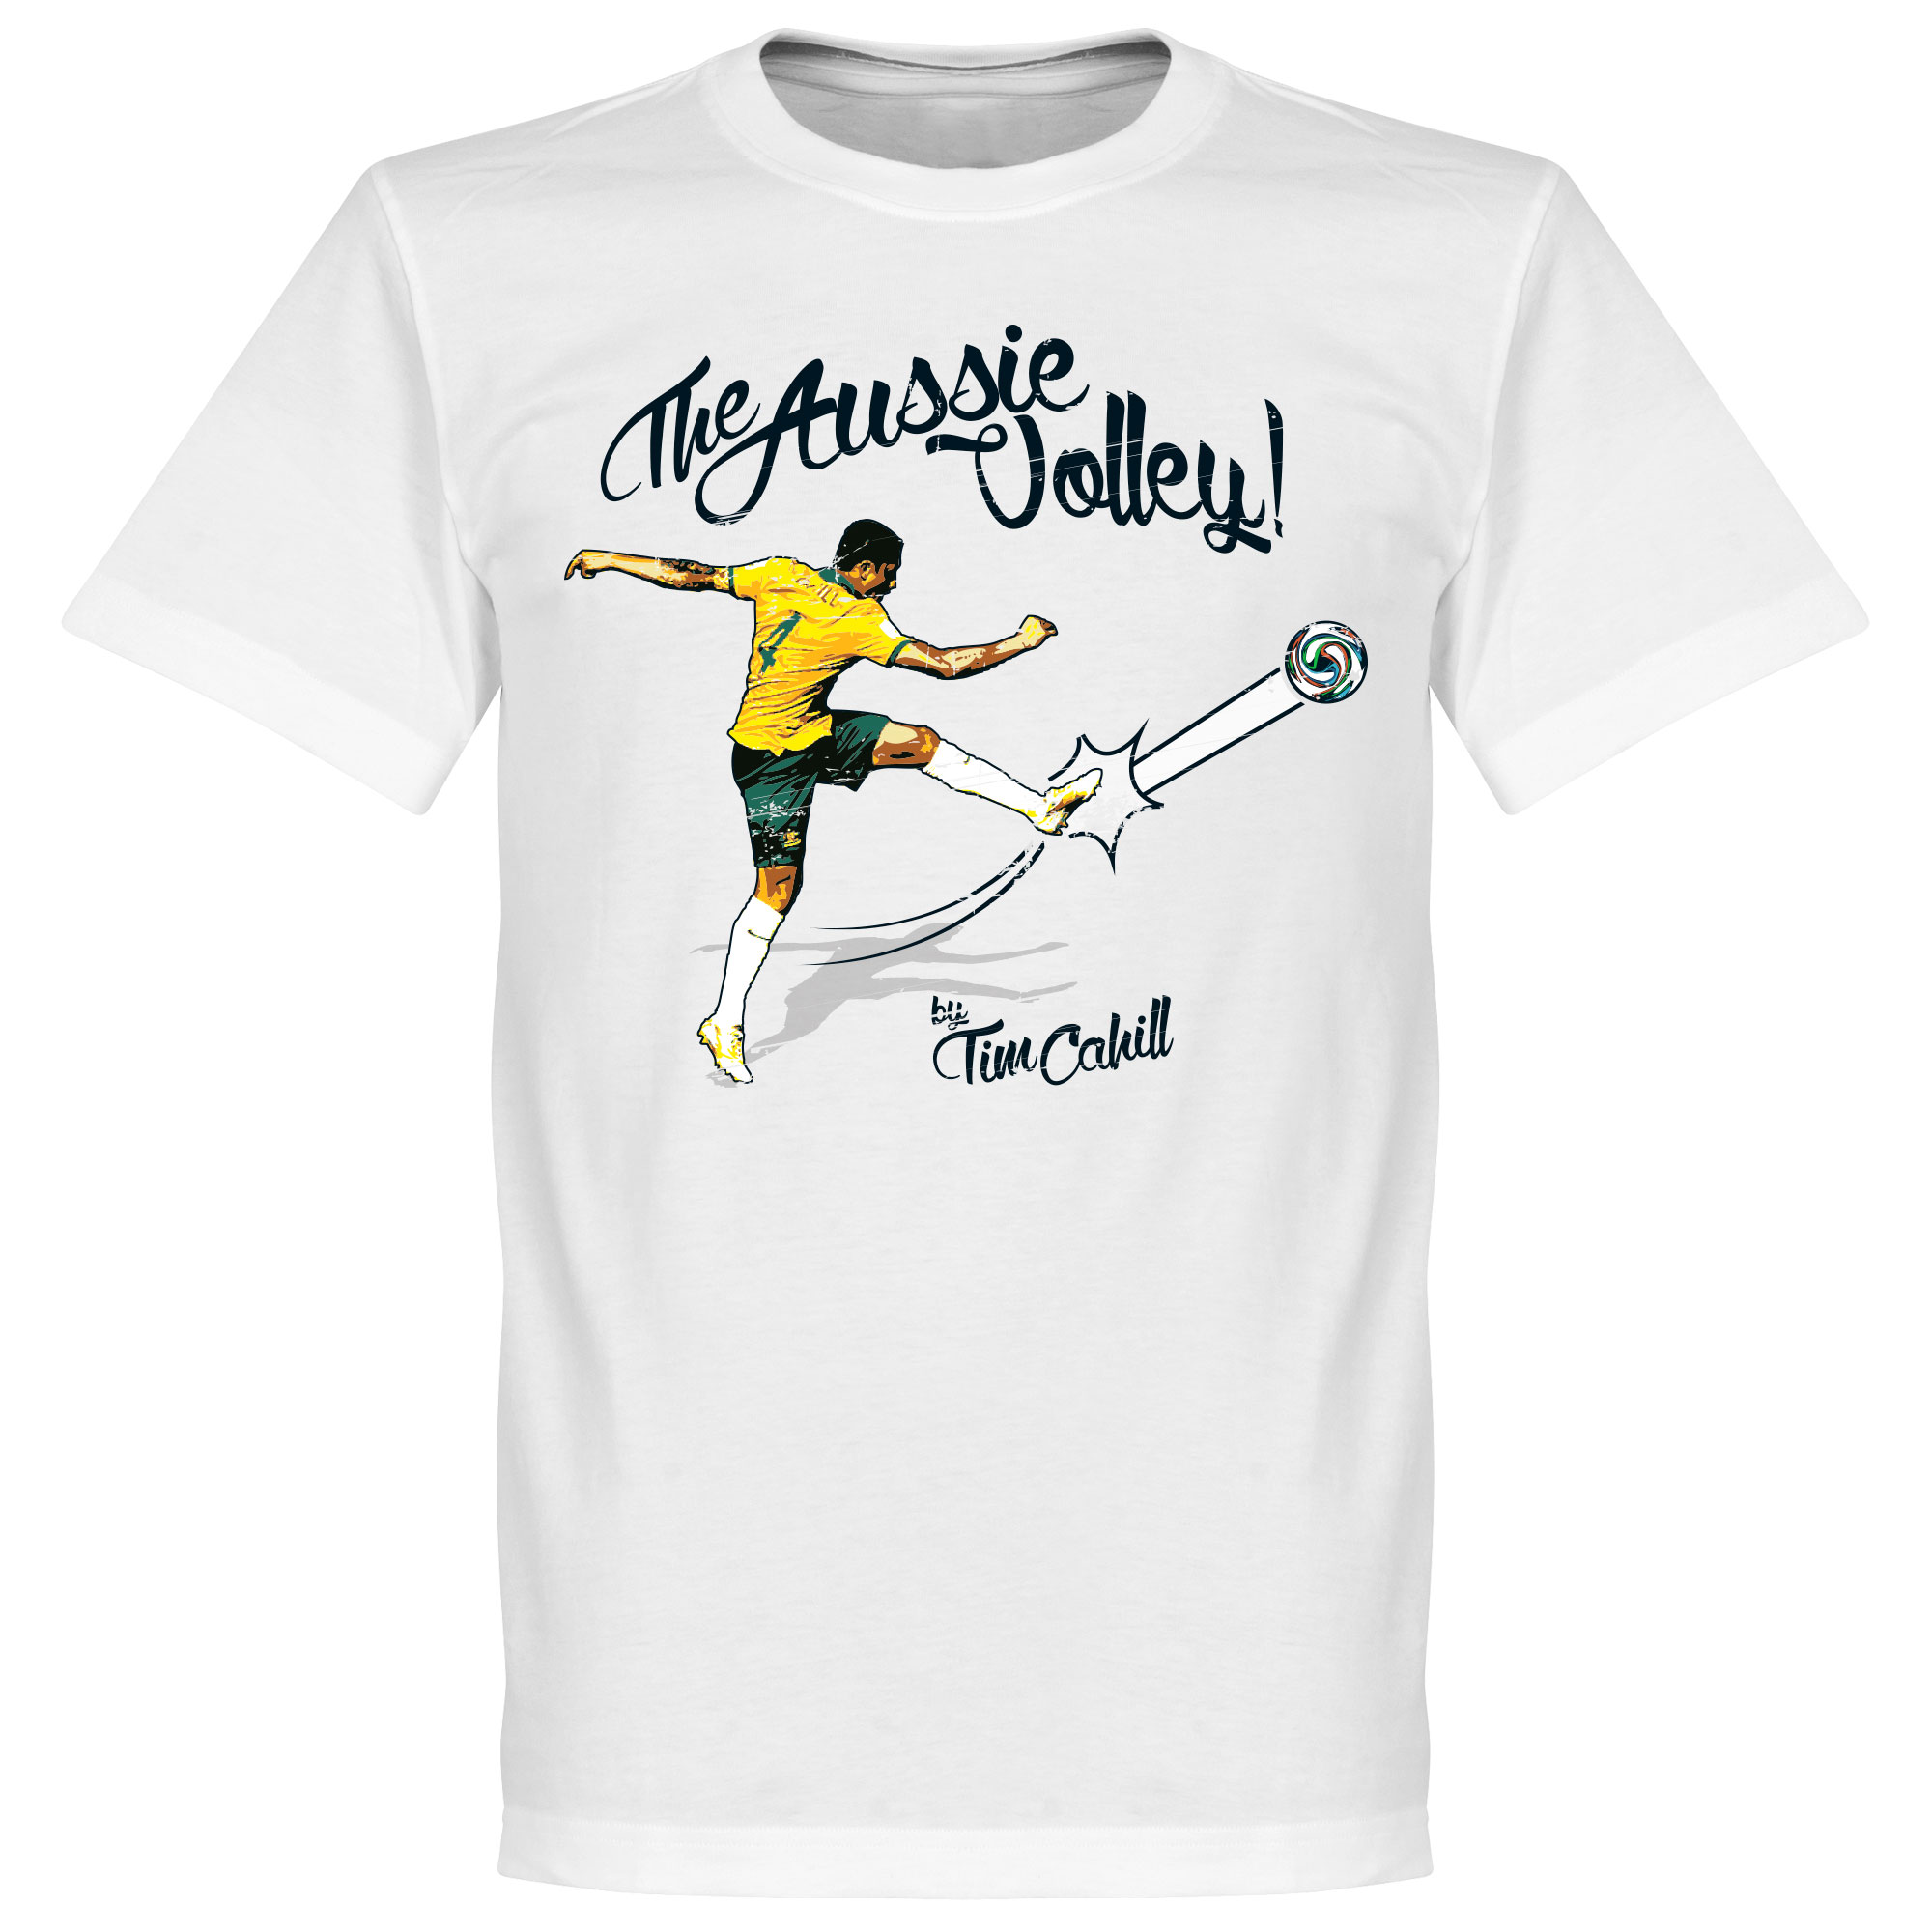 Tim Cahill The Aussie Volley T-Shirt S